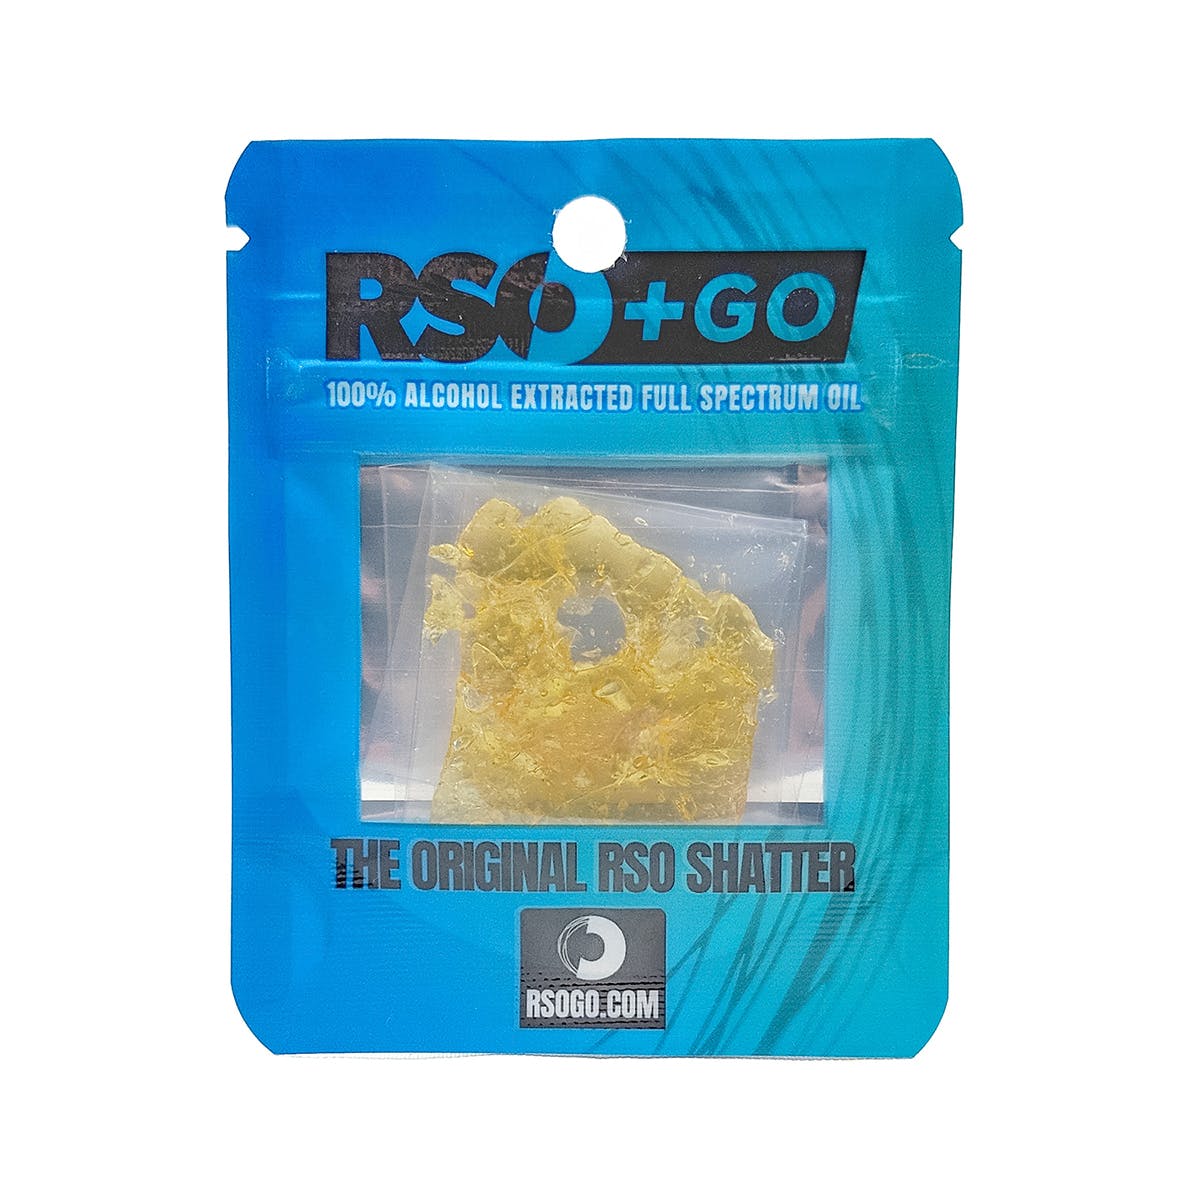 marijuana-dispensaries-kush21-vashon-in-vashon-rso-2bgo-shatter-super-lemon-haze-wa